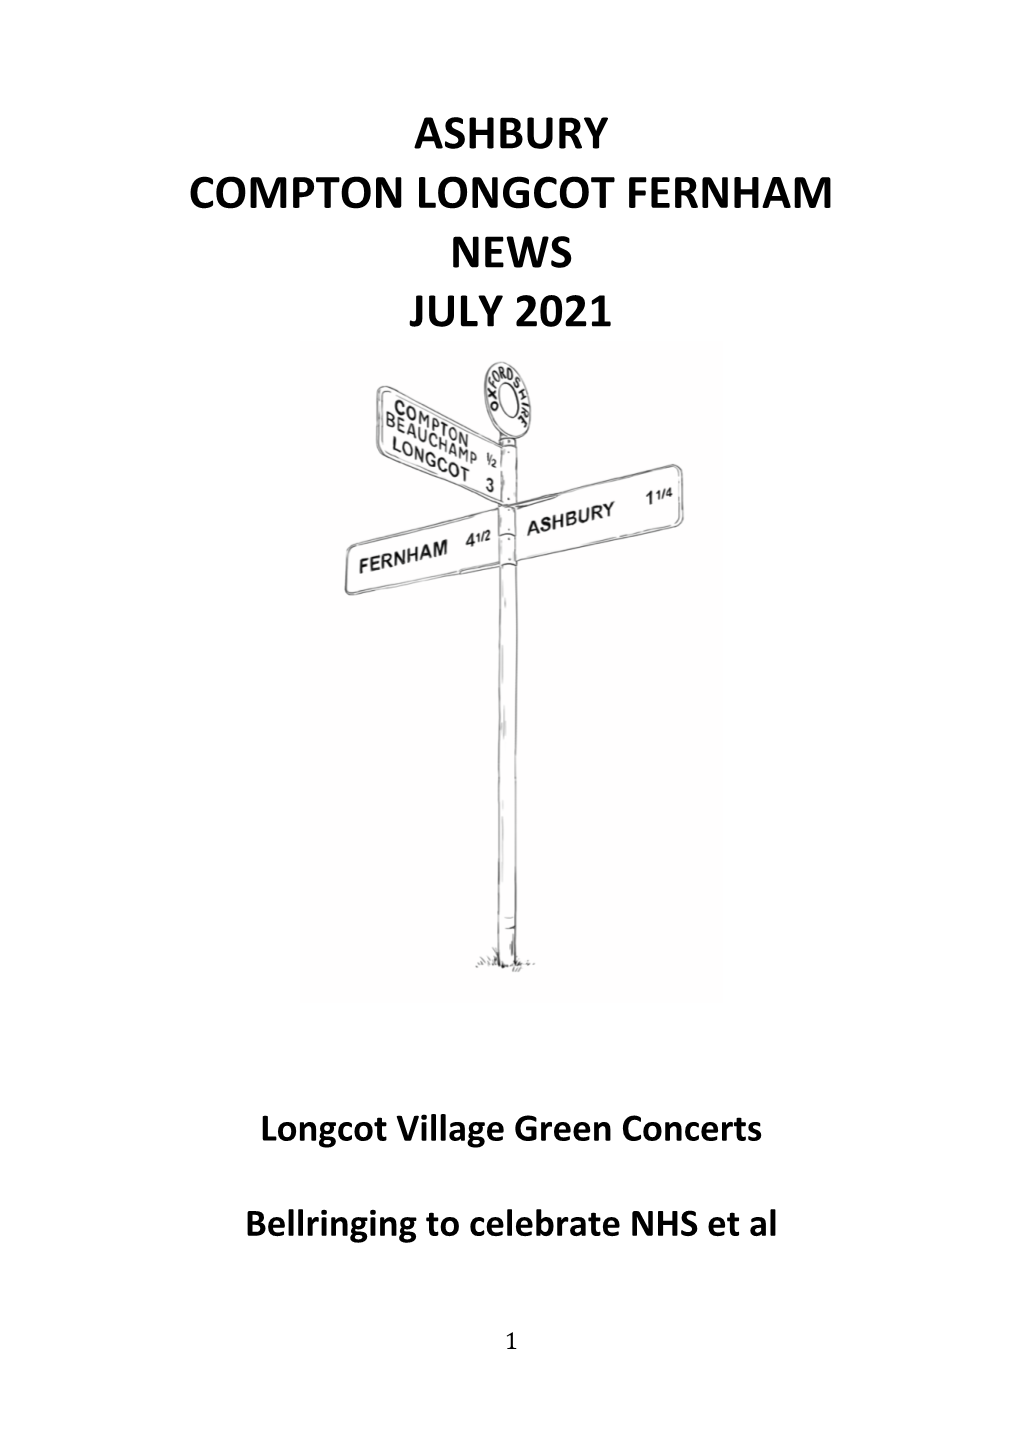 Ashbury Compton Longcot Fernham News July 2021